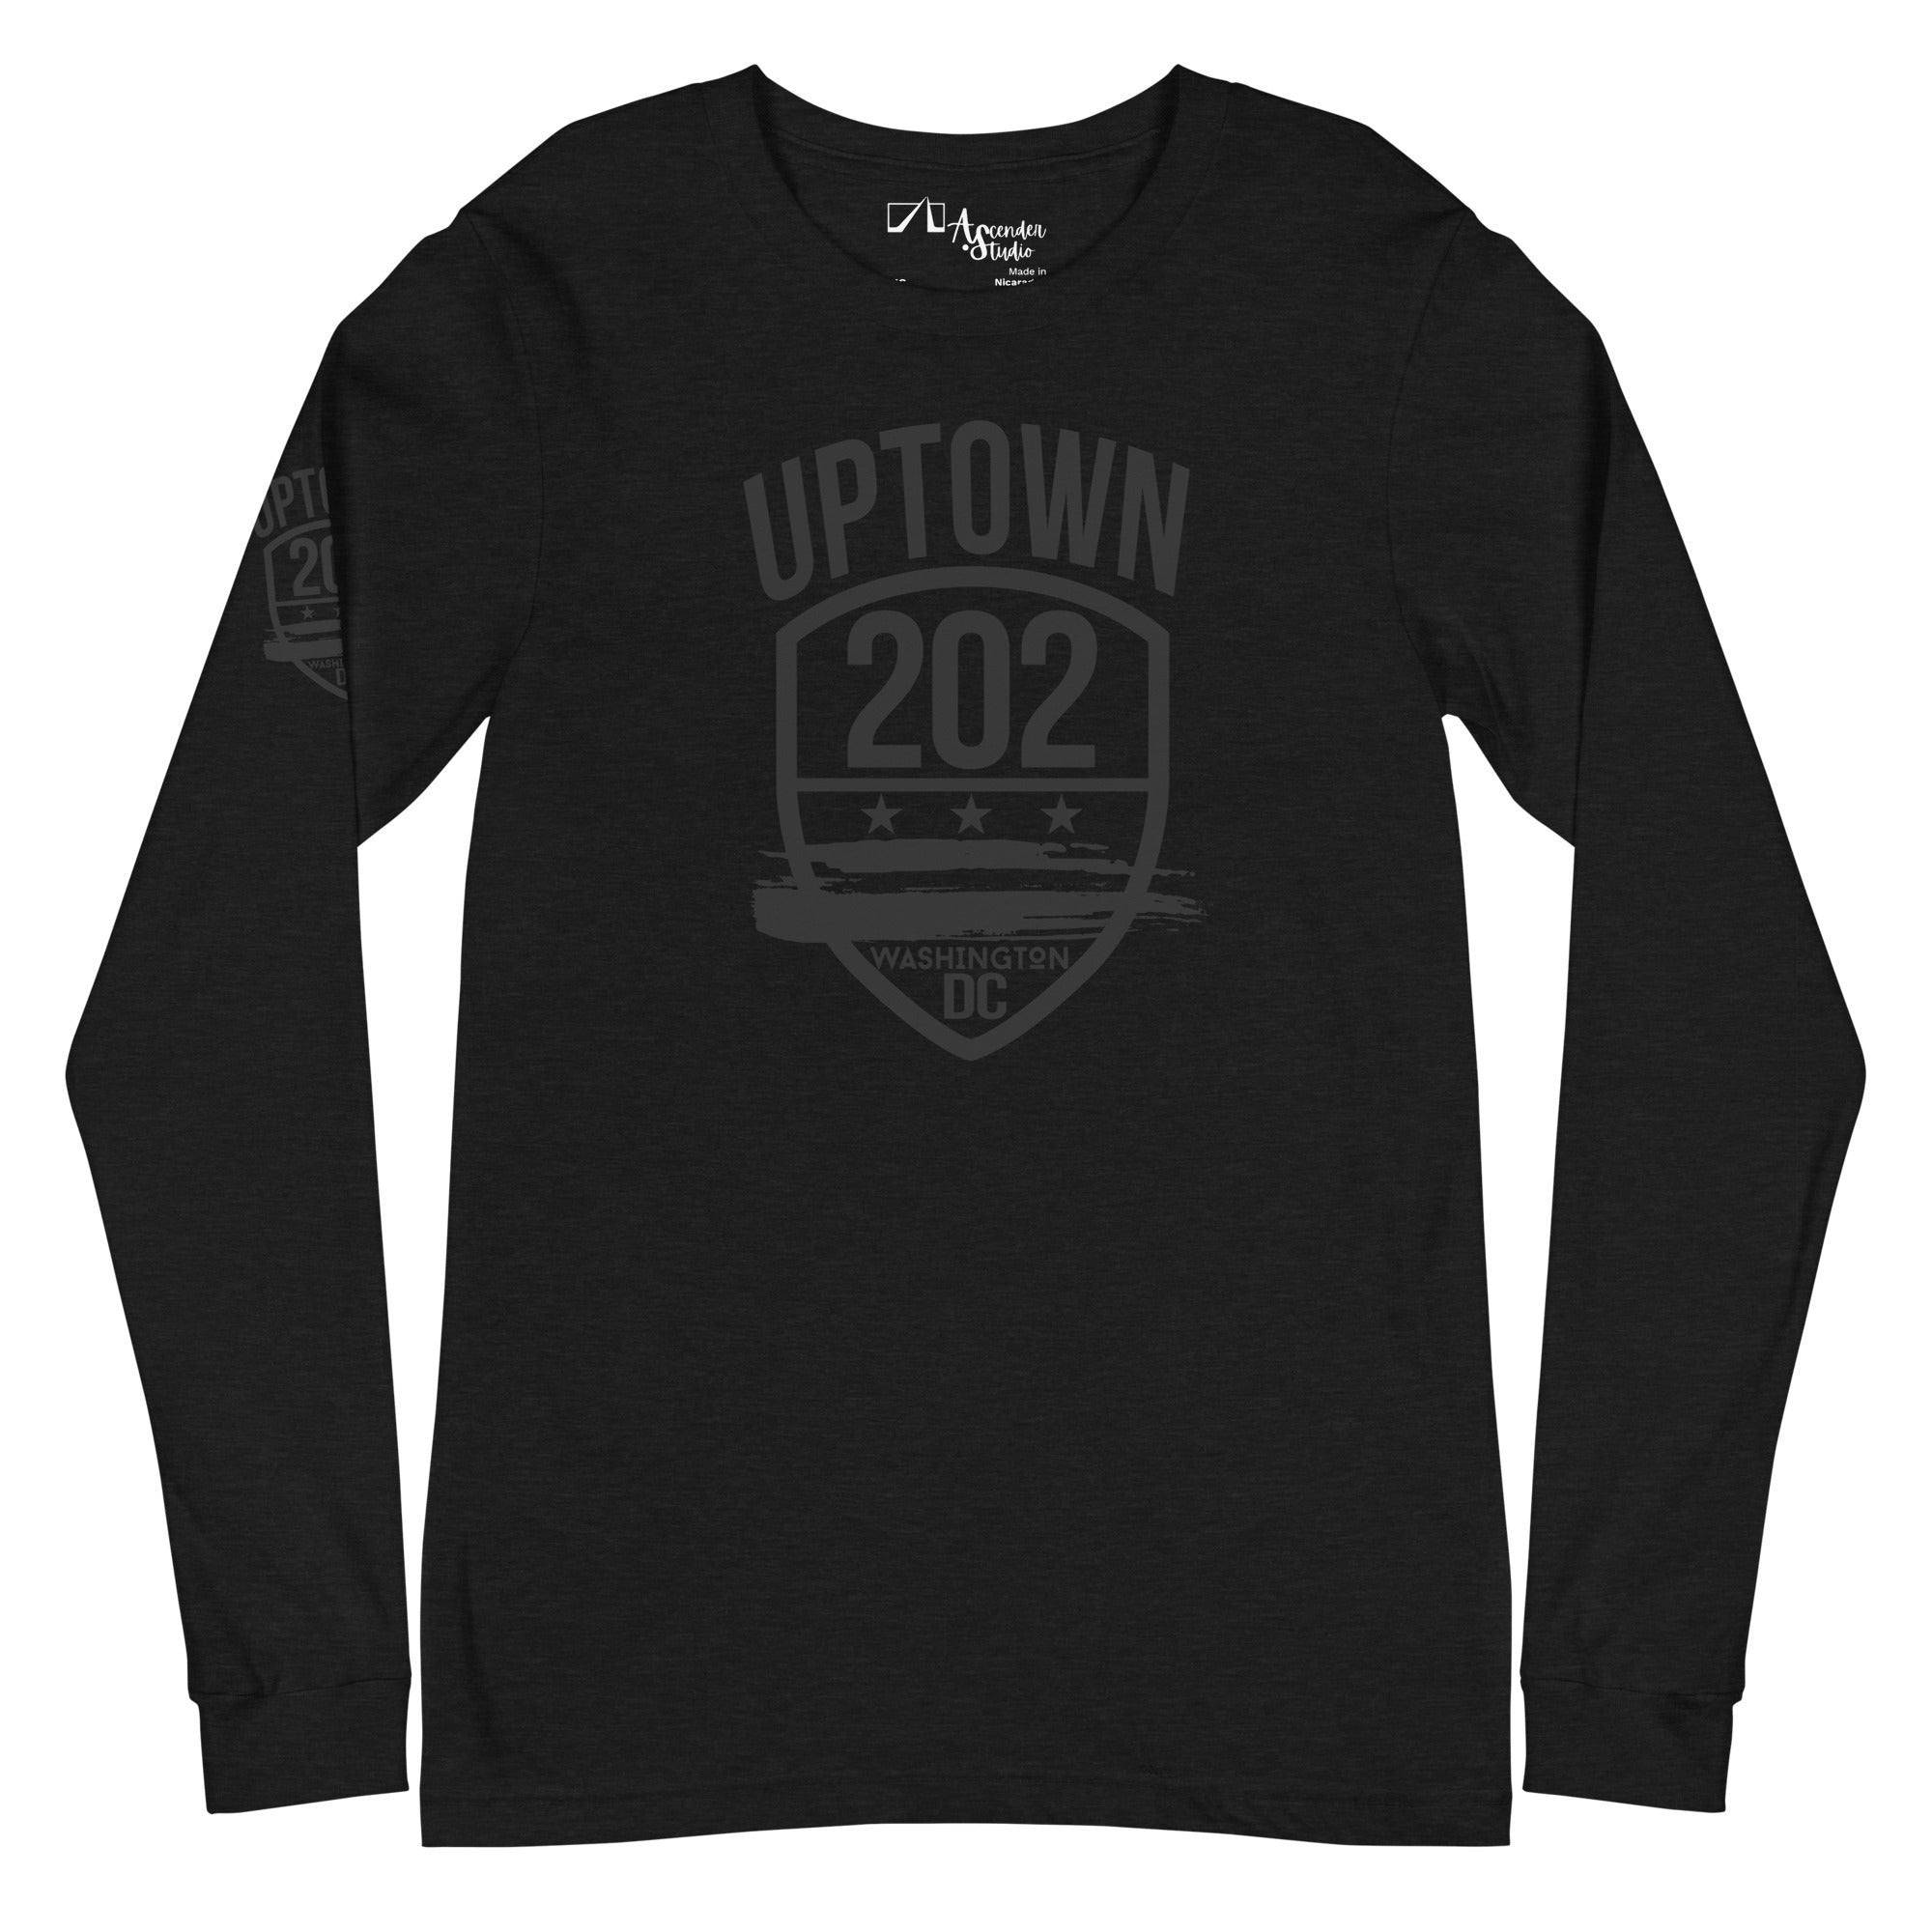 'UPTOWN/202' -All Black, Long Sleeve Tee (Unisex)